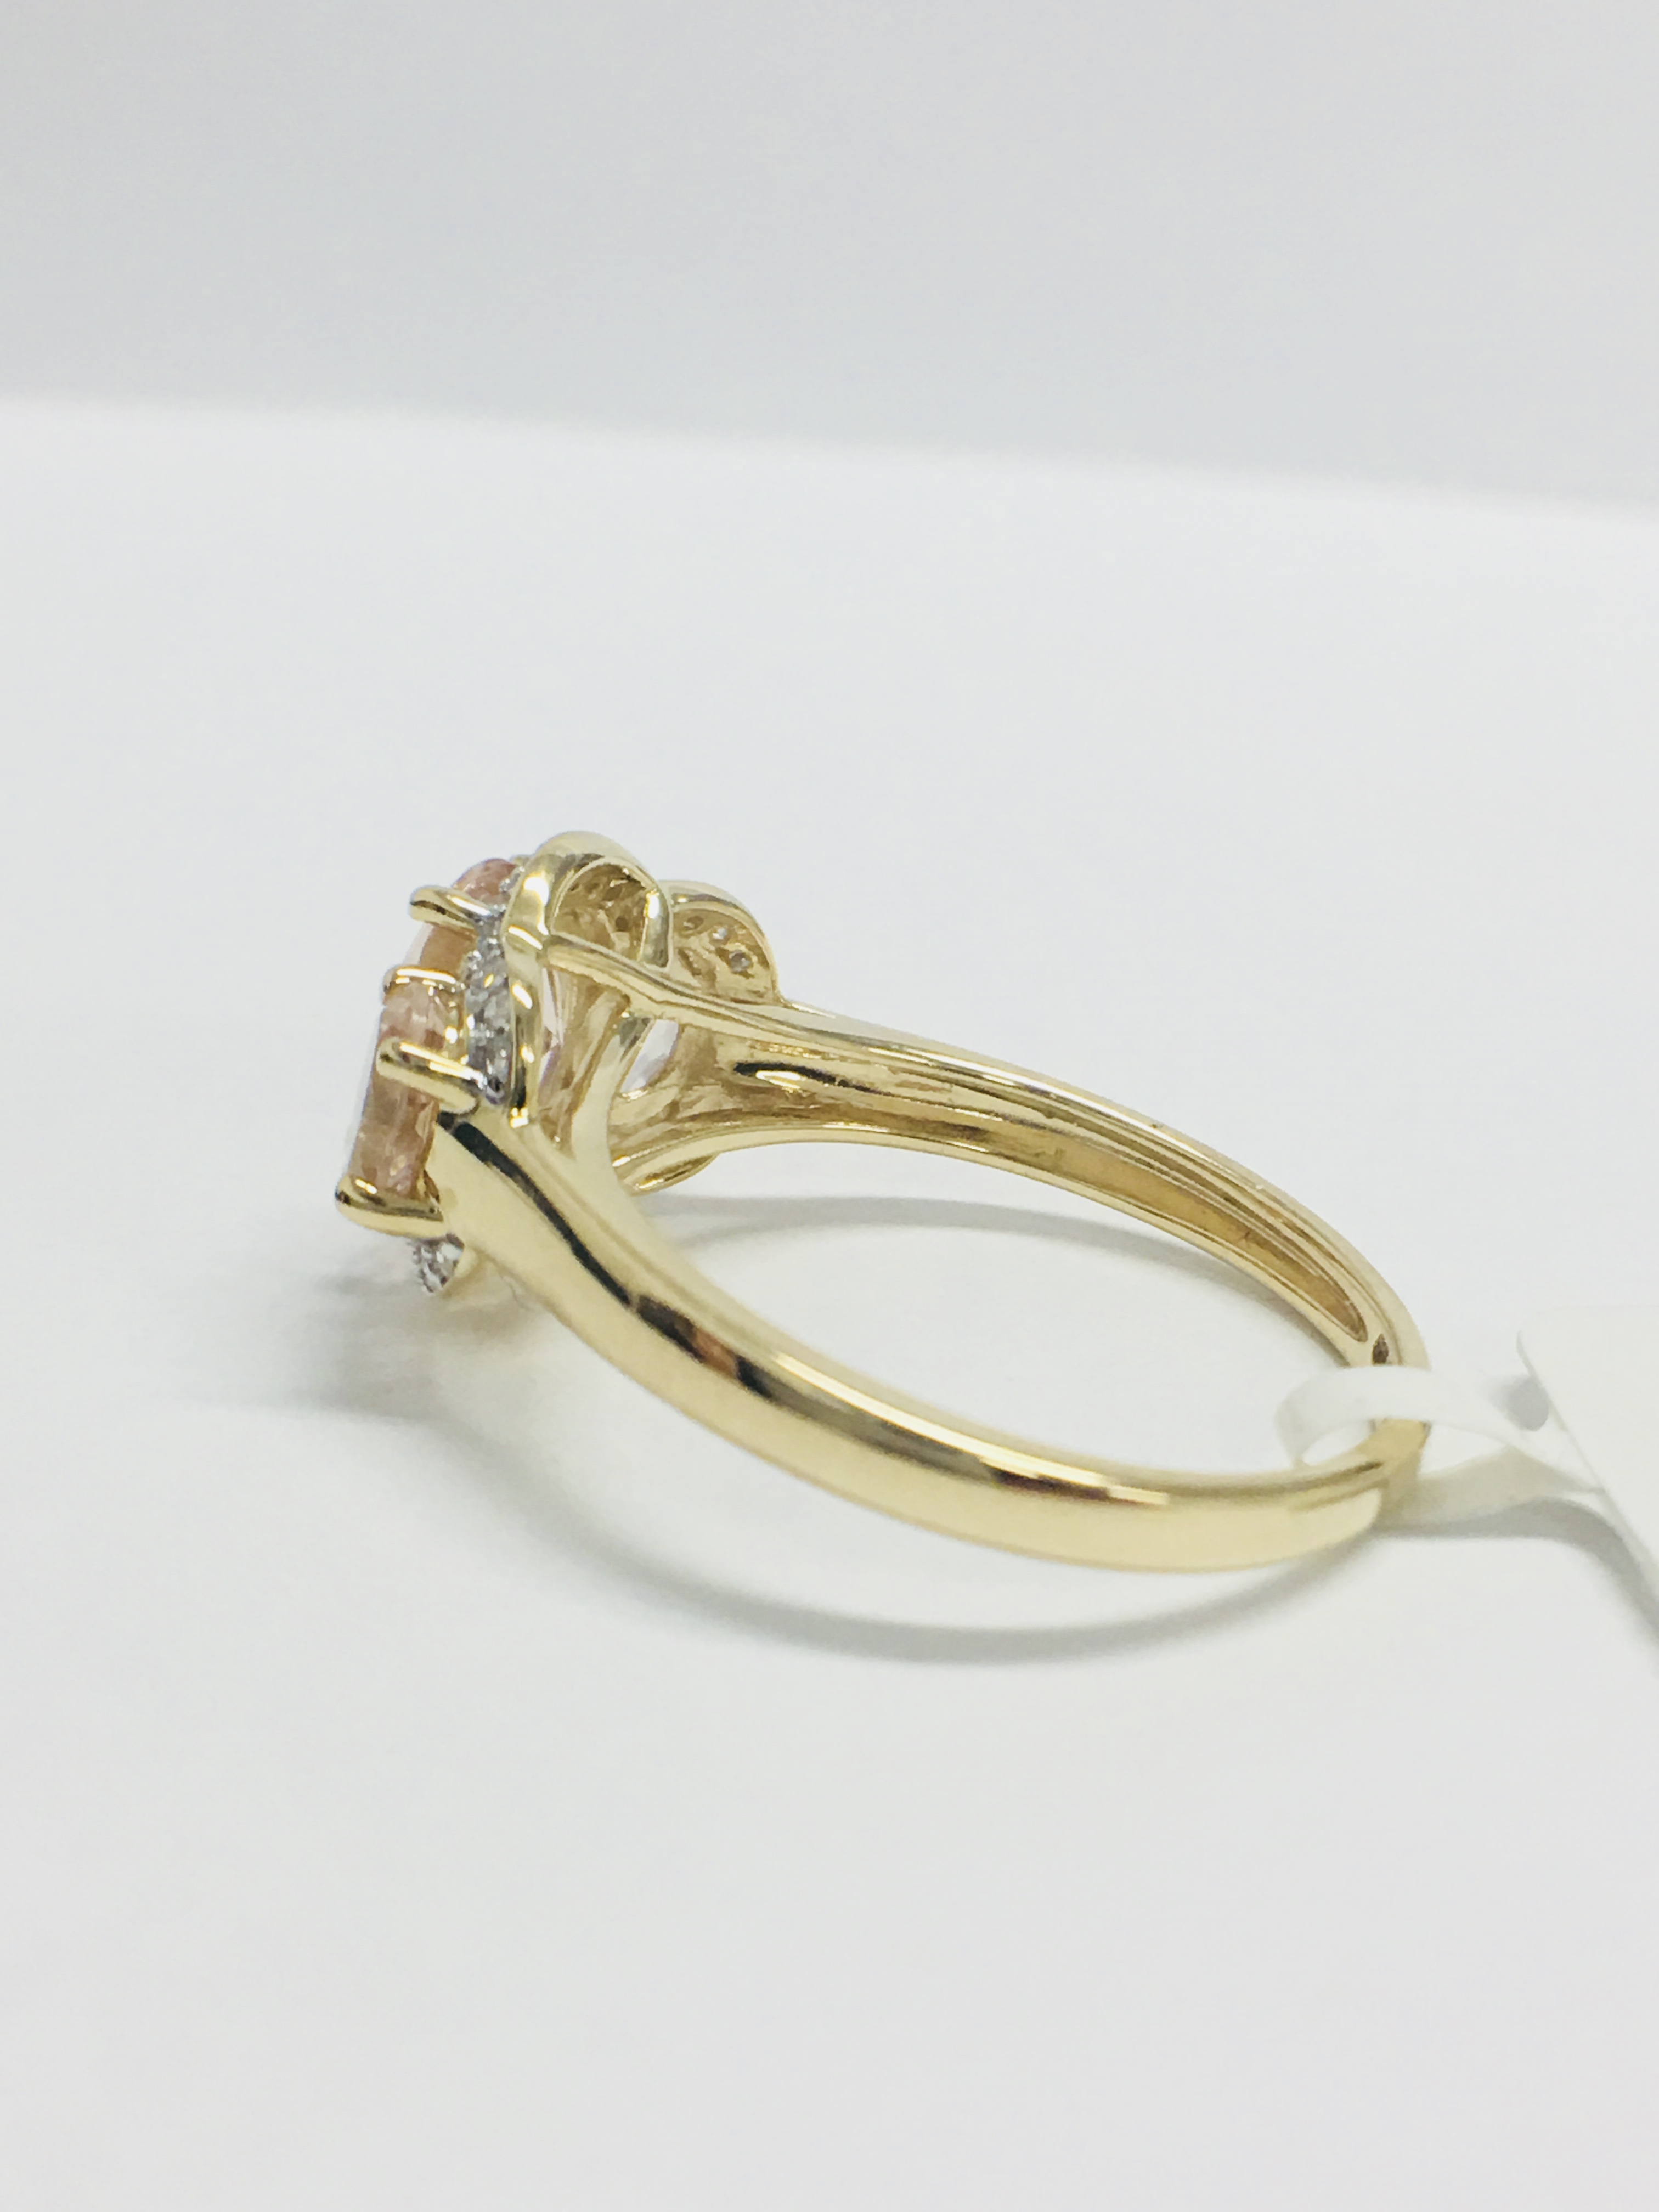 9ct yellow gold morganite and diamond ring - Image 6 of 11